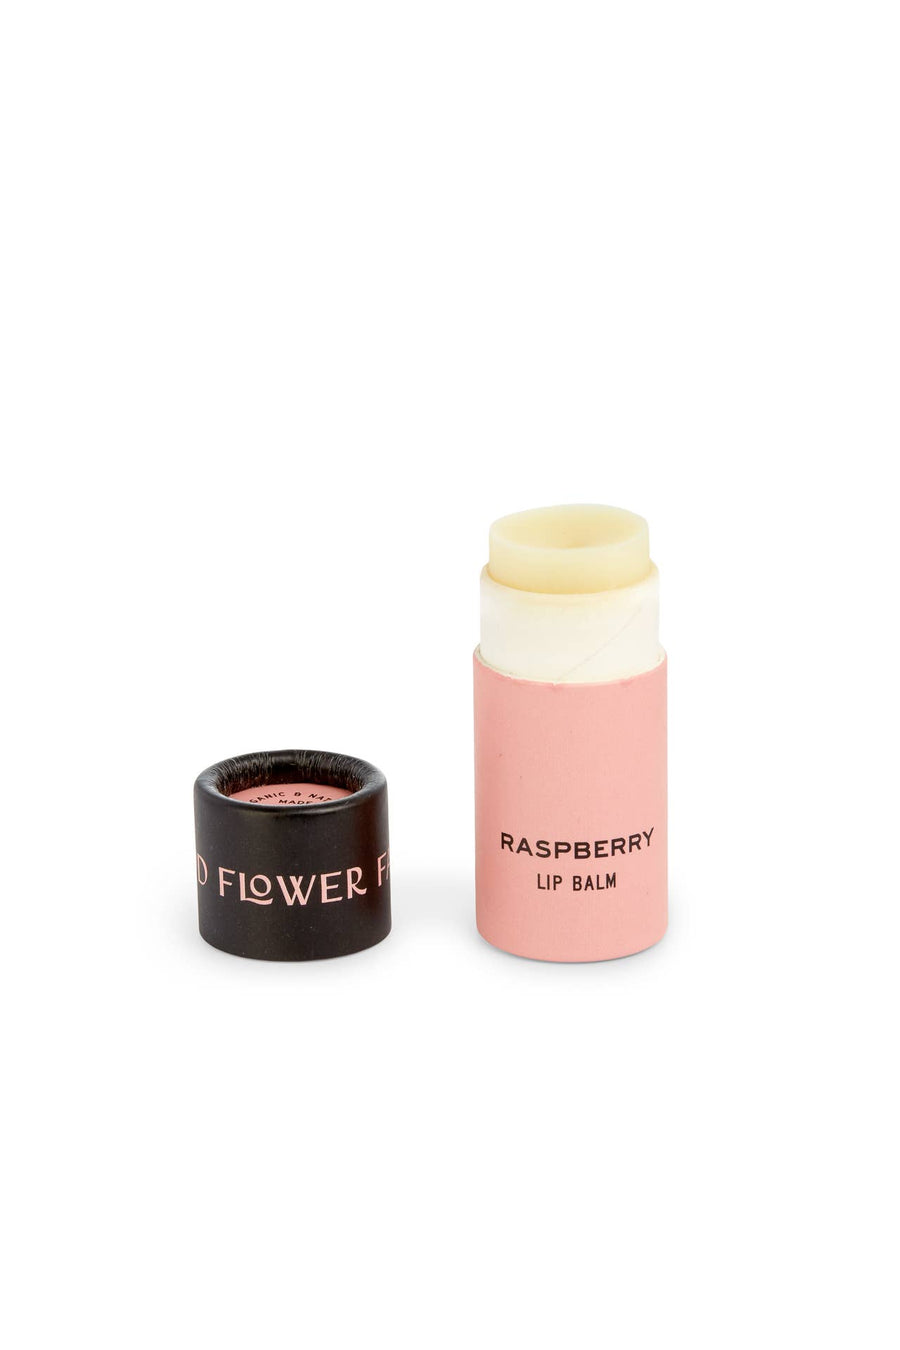 Good Flower Farm - Raspberry Lip Balm / 0.3 oz Biodegradable Tube